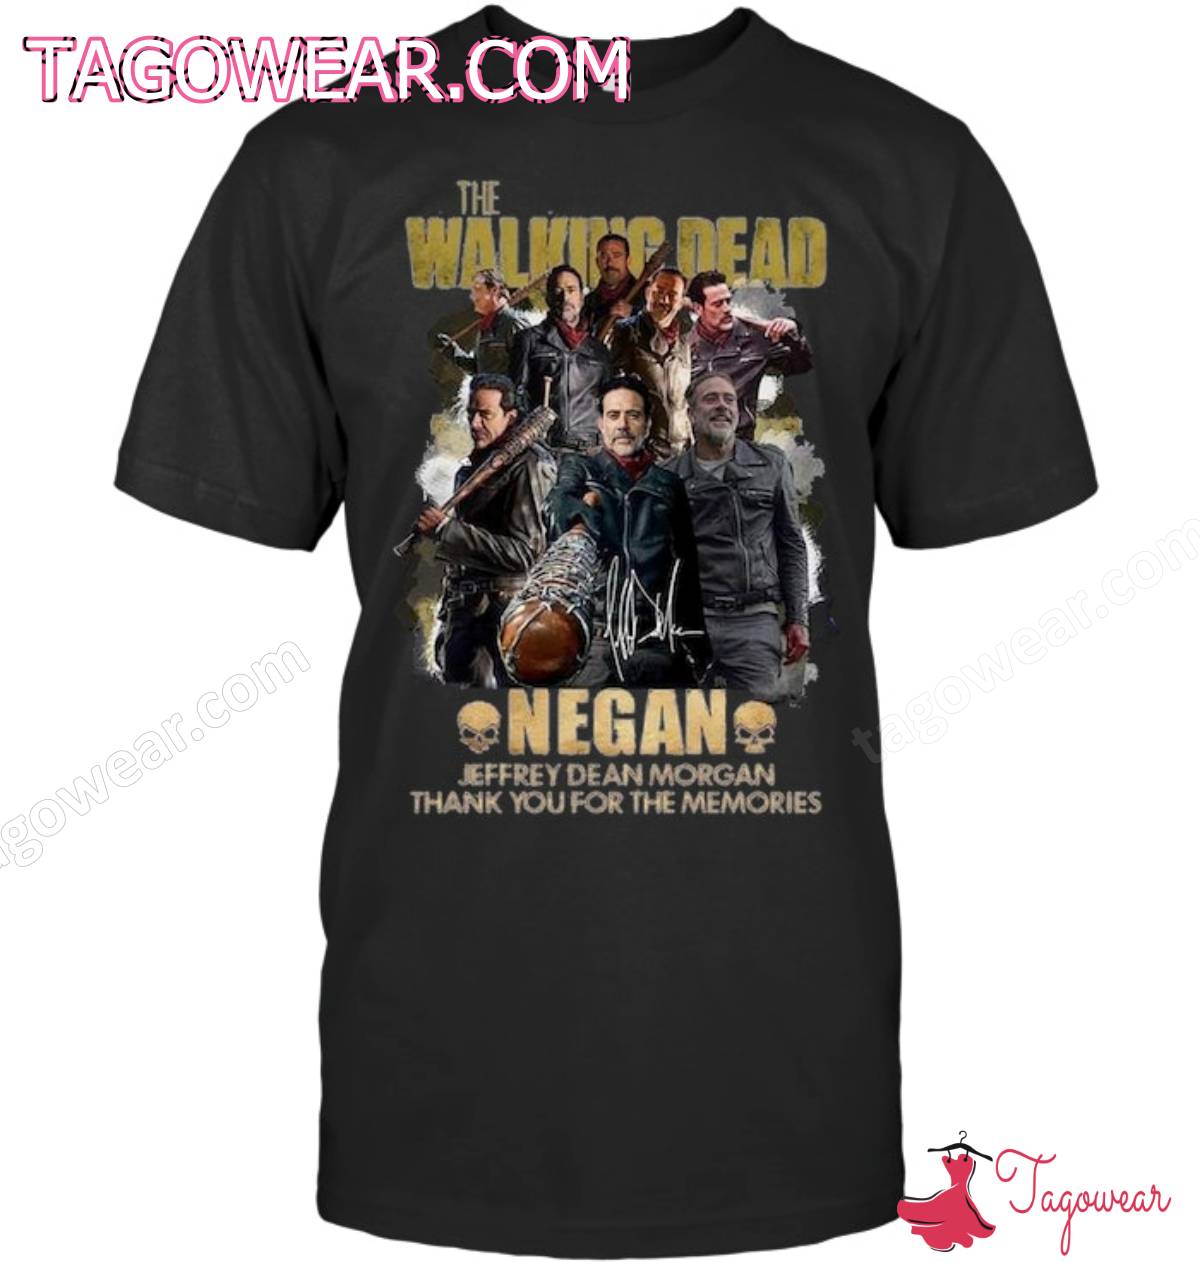 The Walking Dead Jeffrey Dean Morgan Negan Thank You For The Memories Shirt a